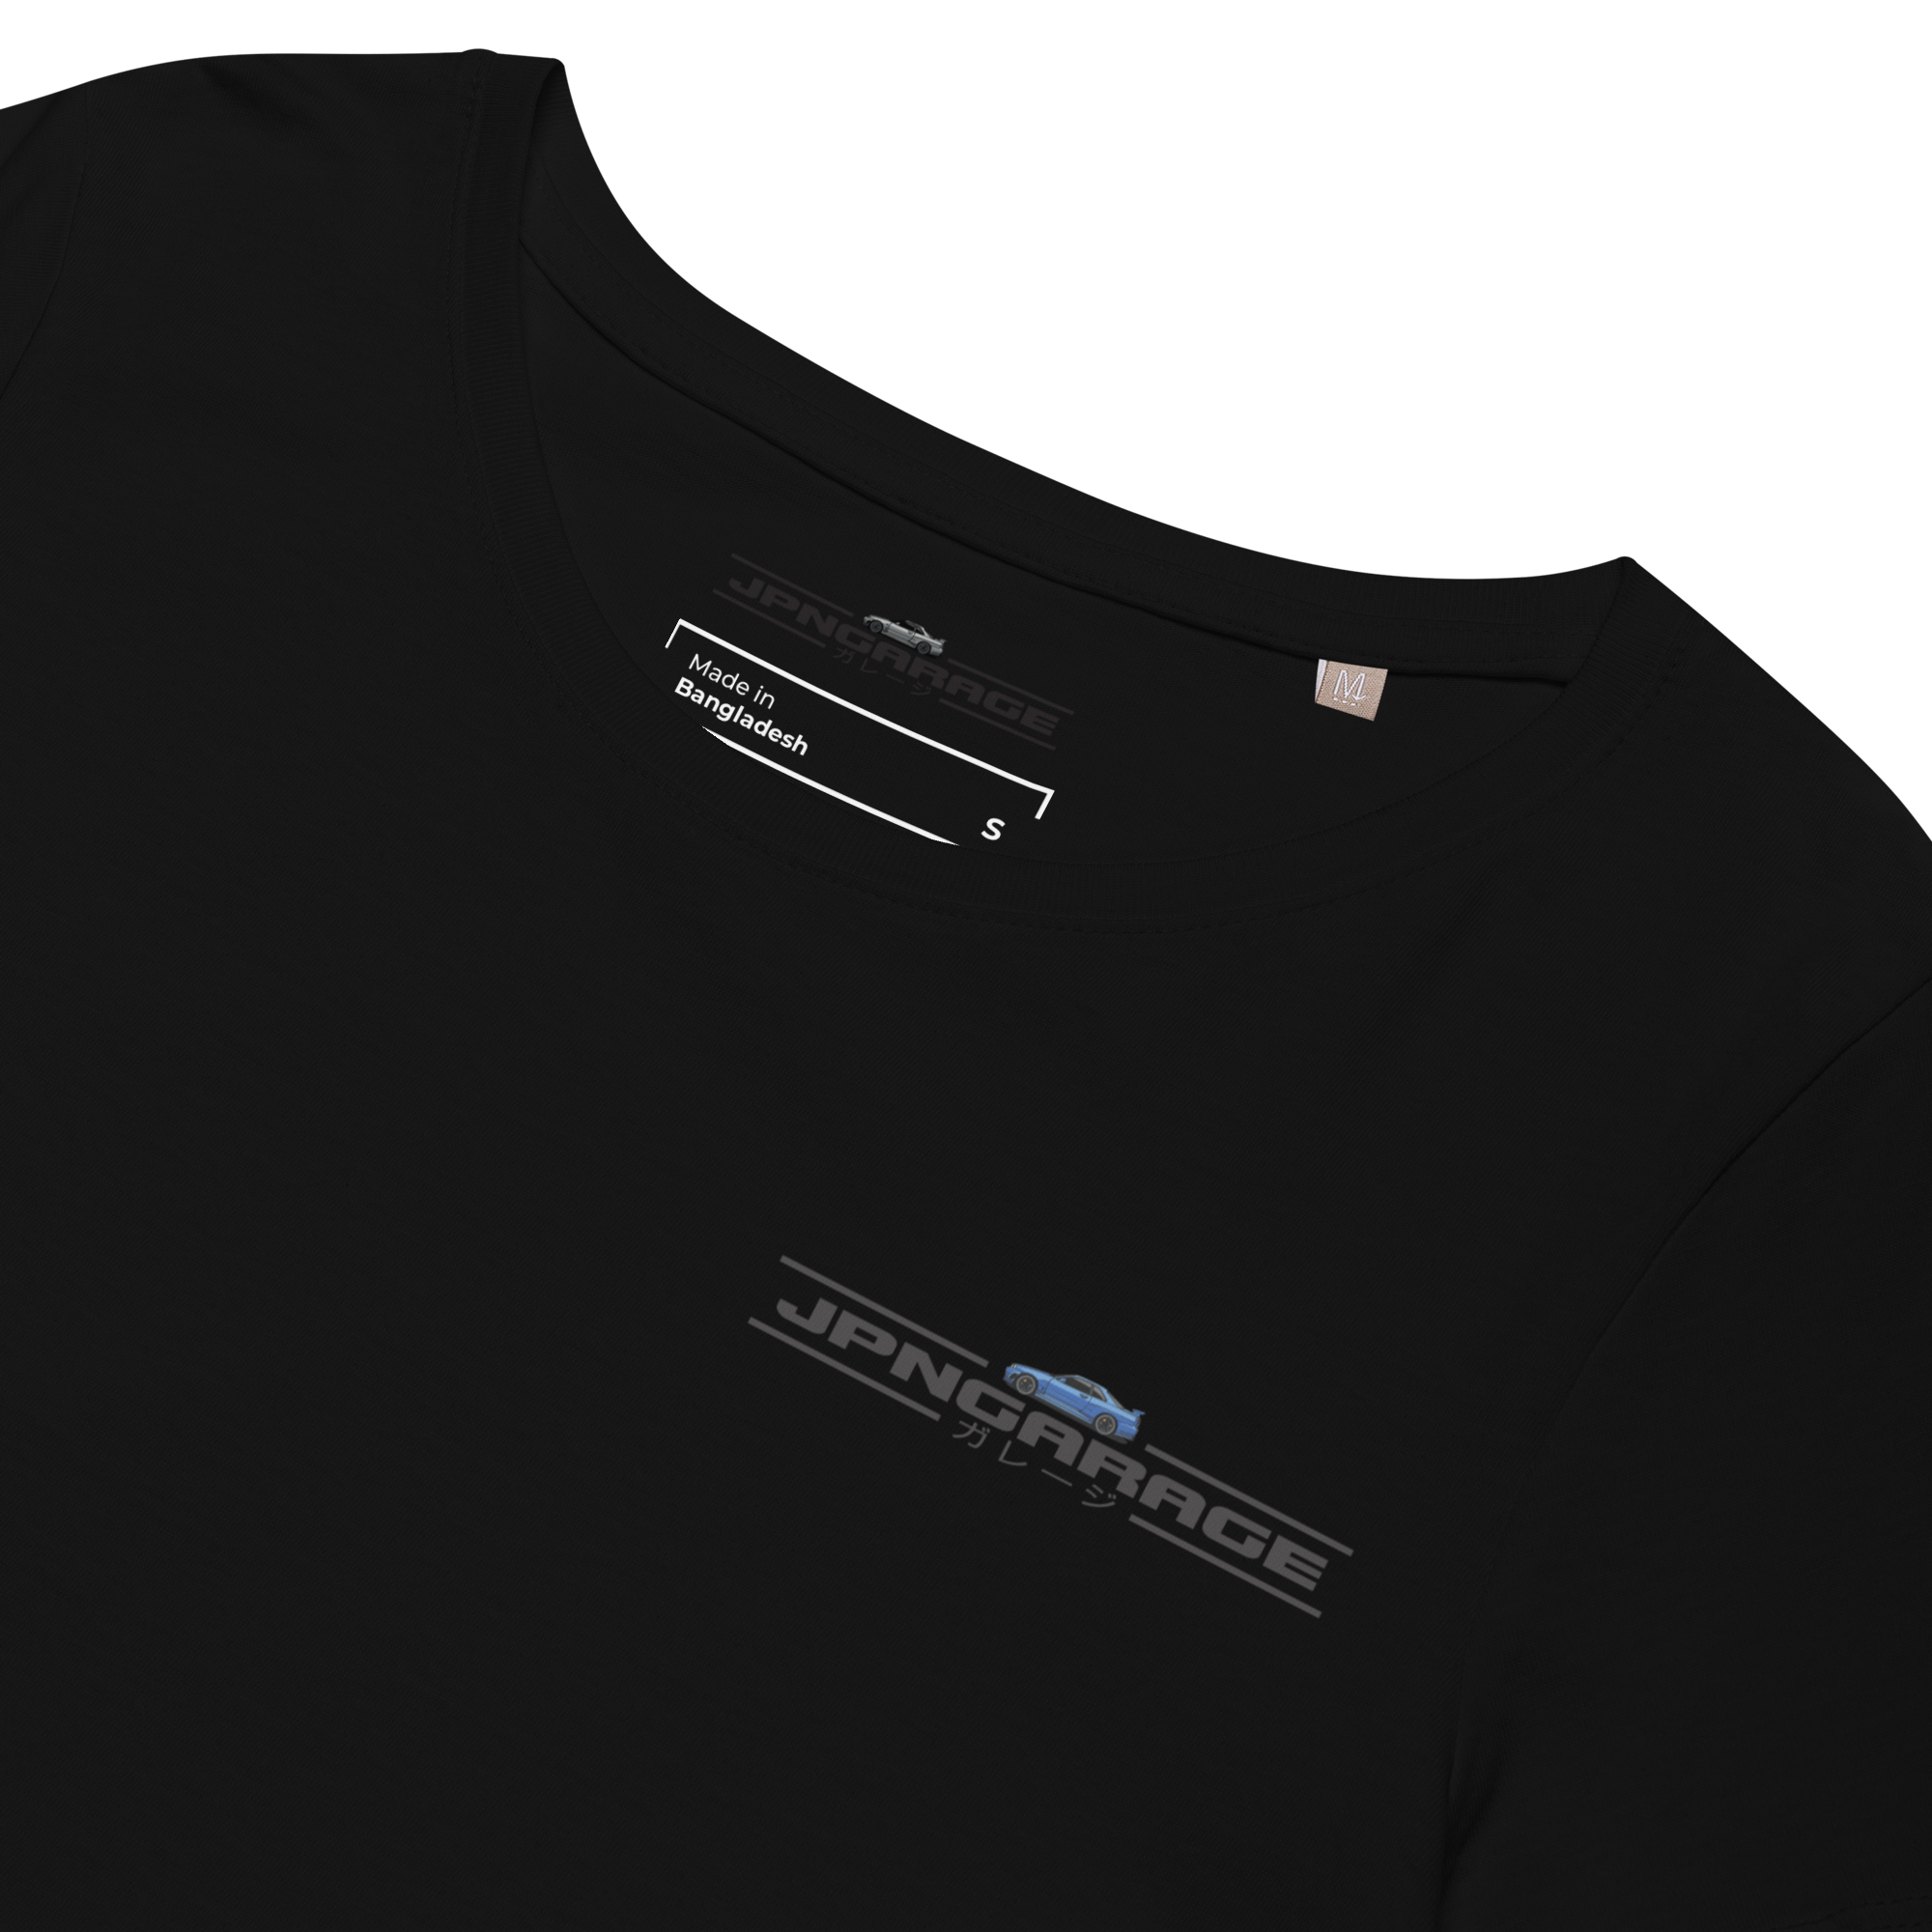 #JPNGarage GTR T-Shirt - #BNR34 Blau Damen